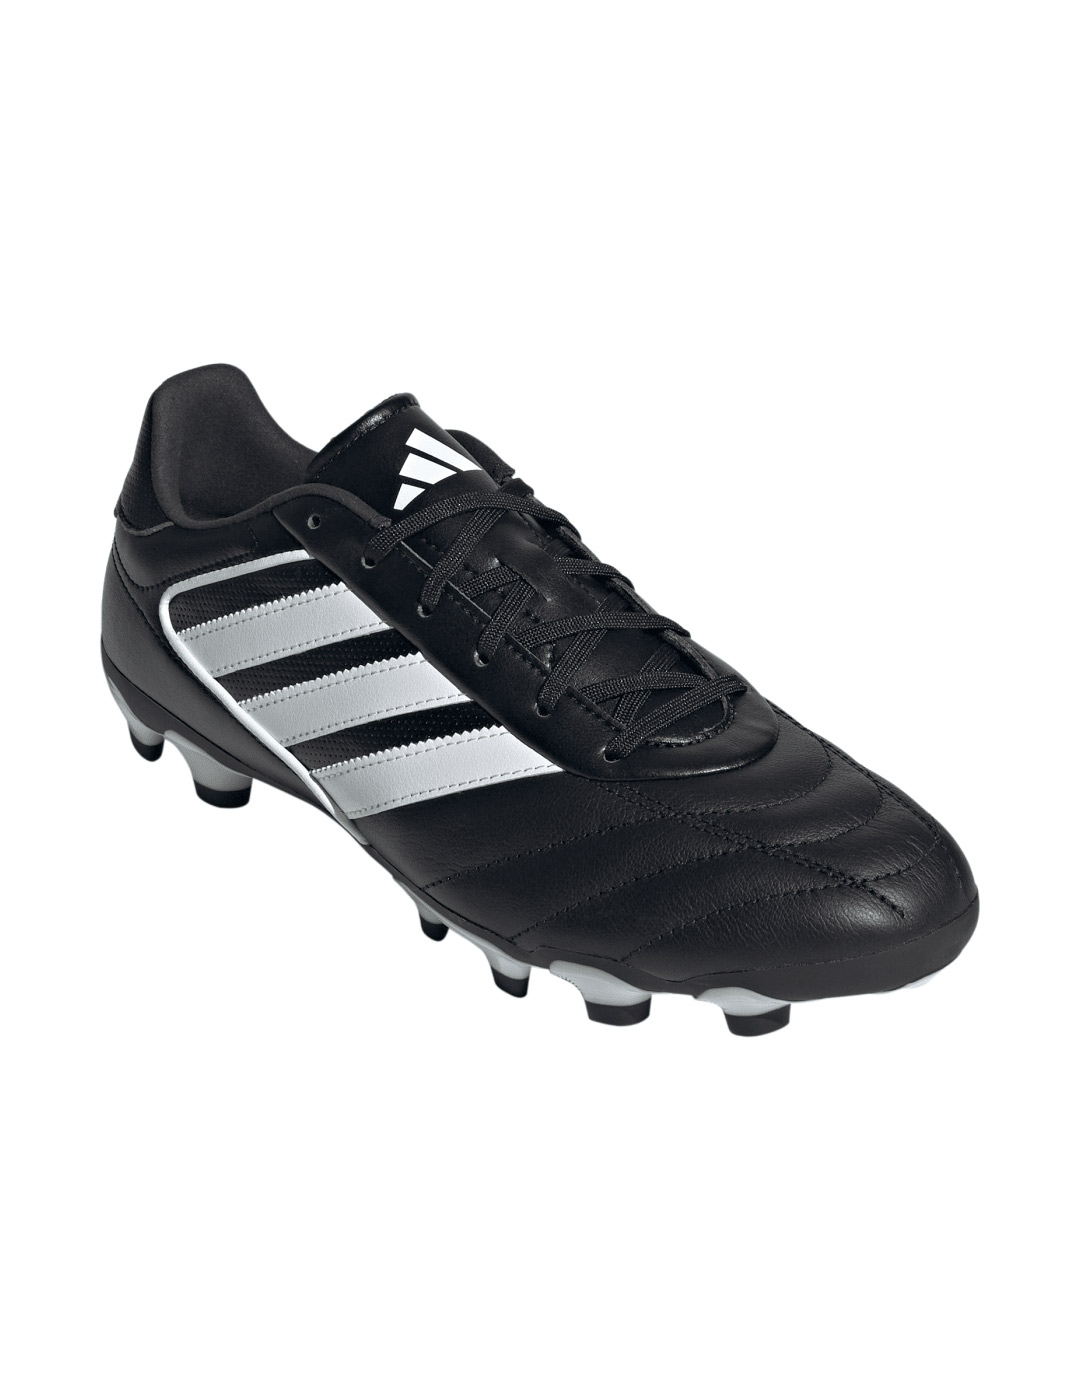 bota de fútbol adidas COPA GLORO II ST MG, negro/blanco